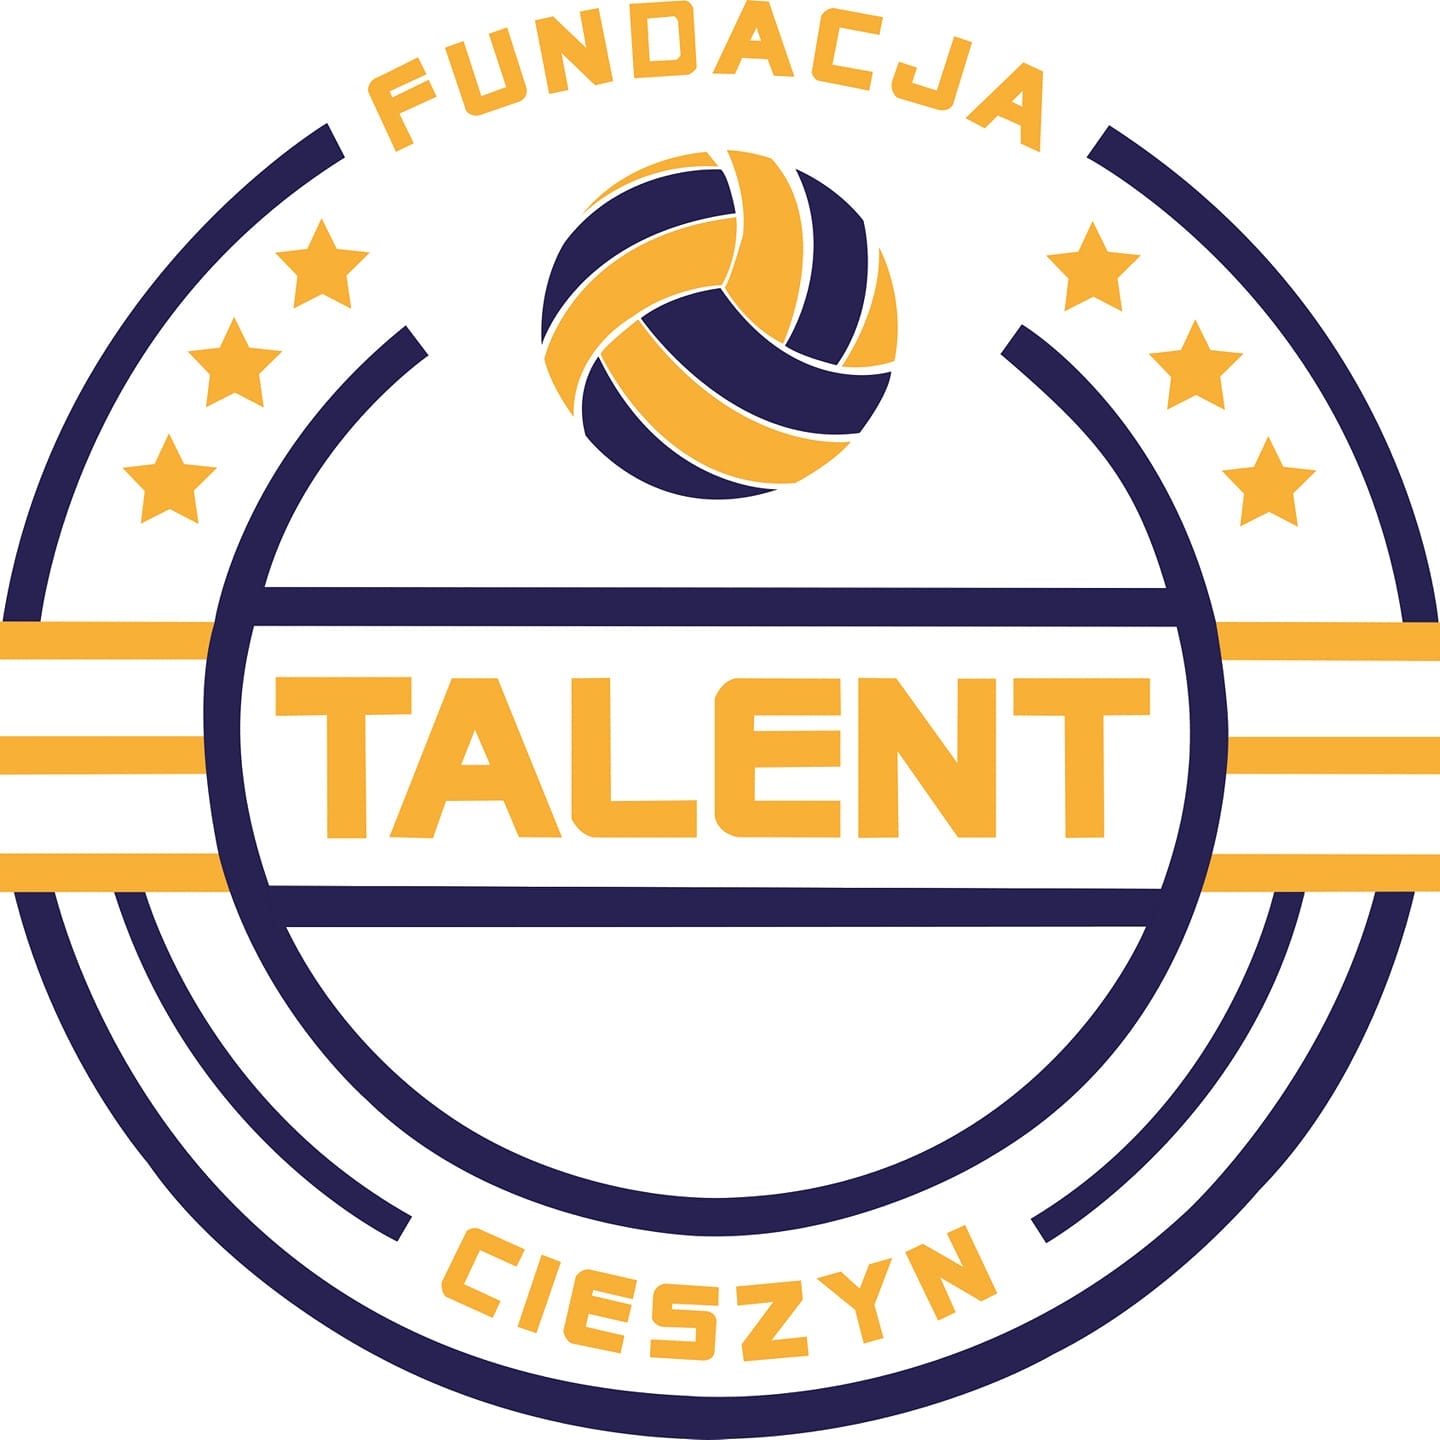 Talent Sferawent Cieszyn Logo